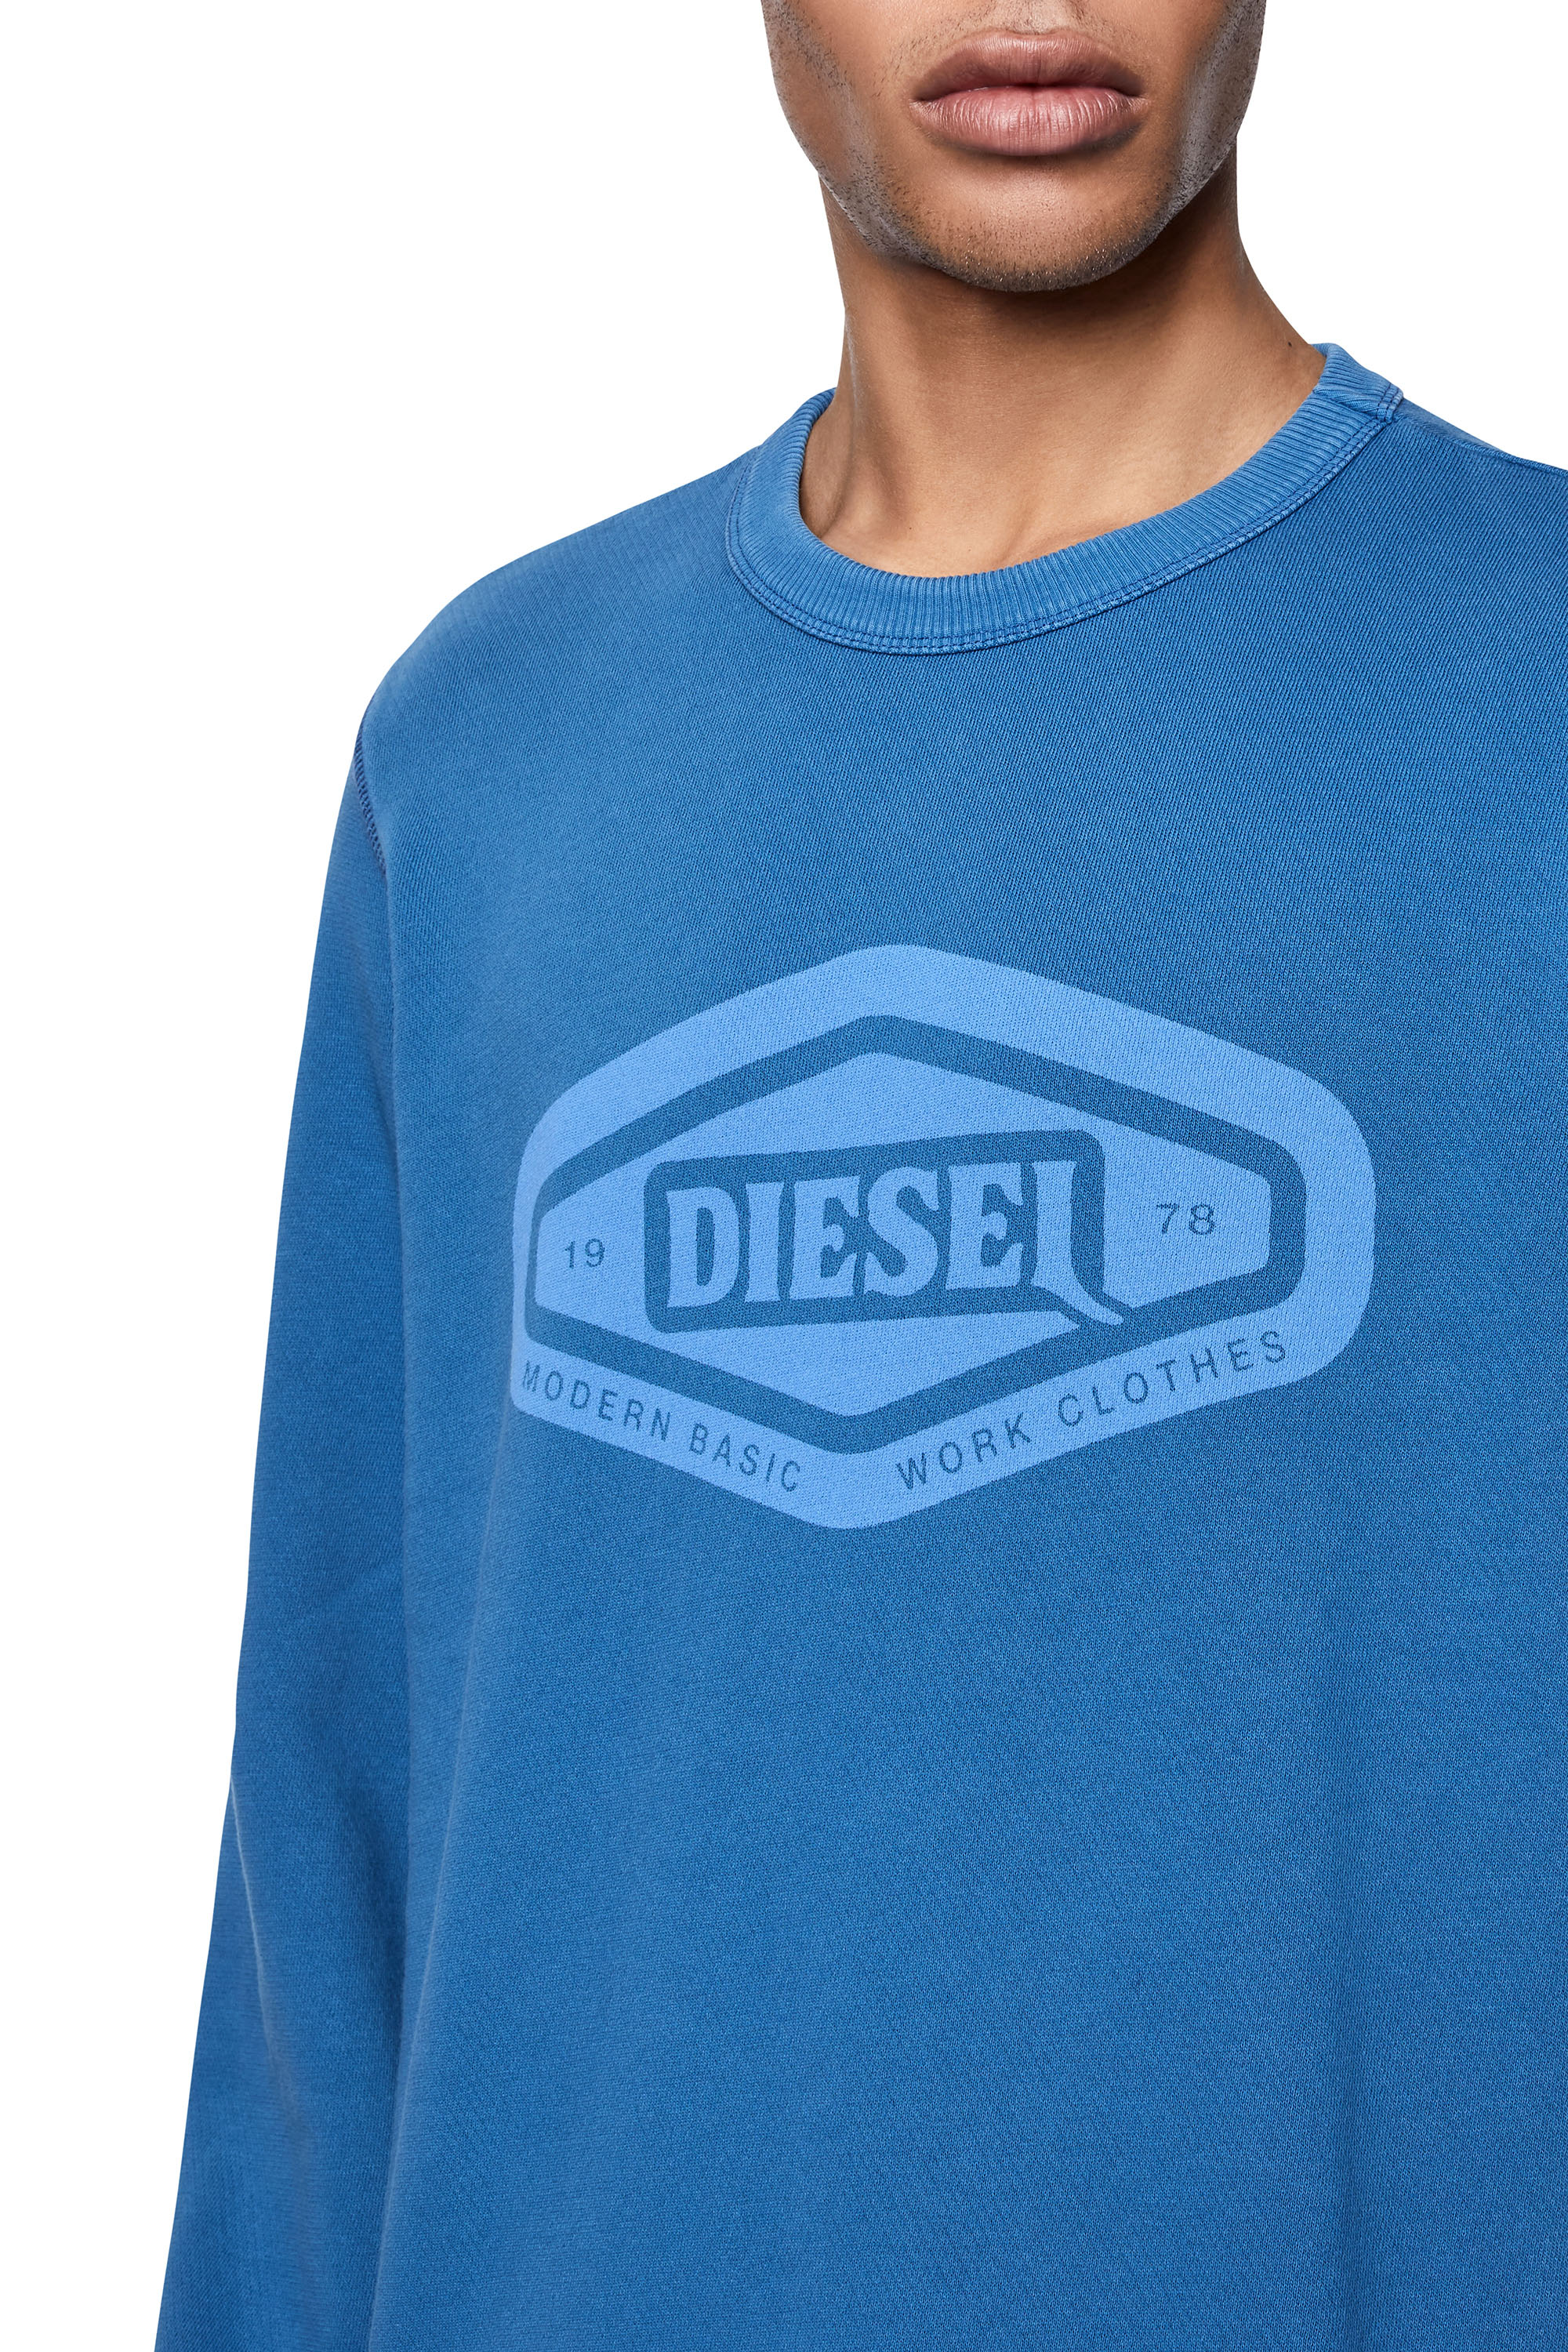 Diesel - S-GINN-D1, Blue - Image 3